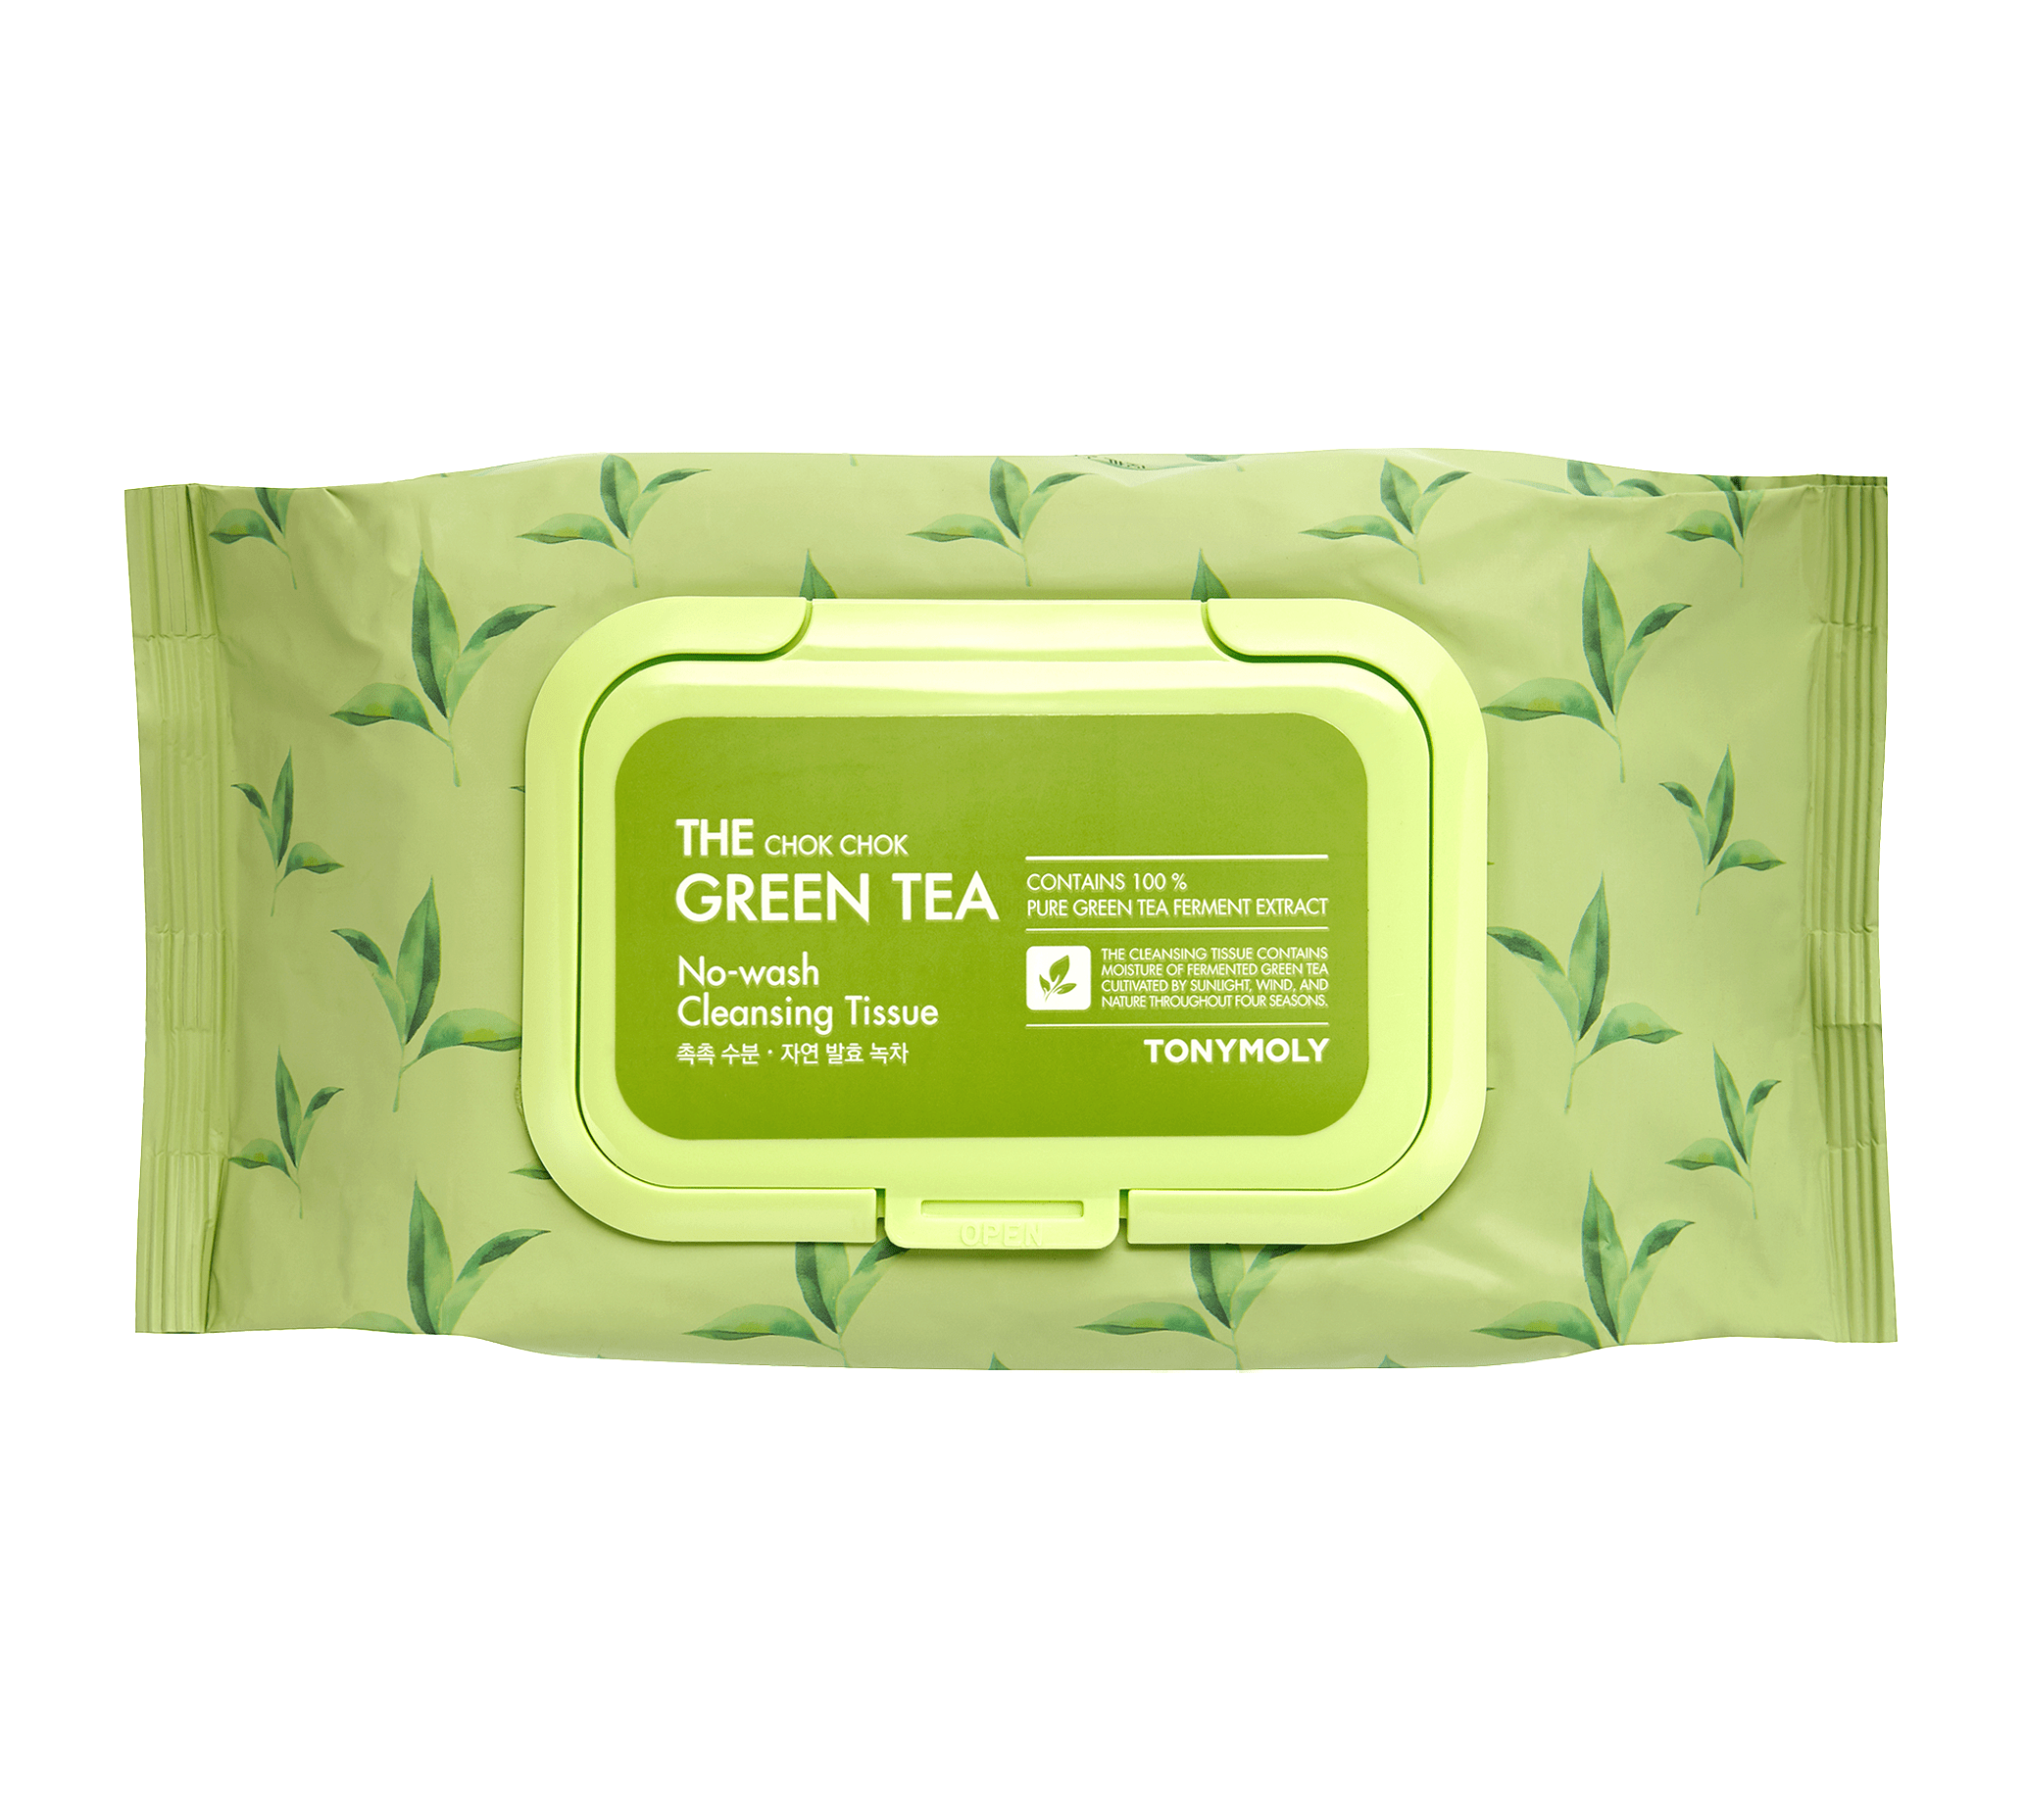 TONYMOLY The Chok Chok Green Tea Cleansing Tissue Kawaii Gifts 8806194026336